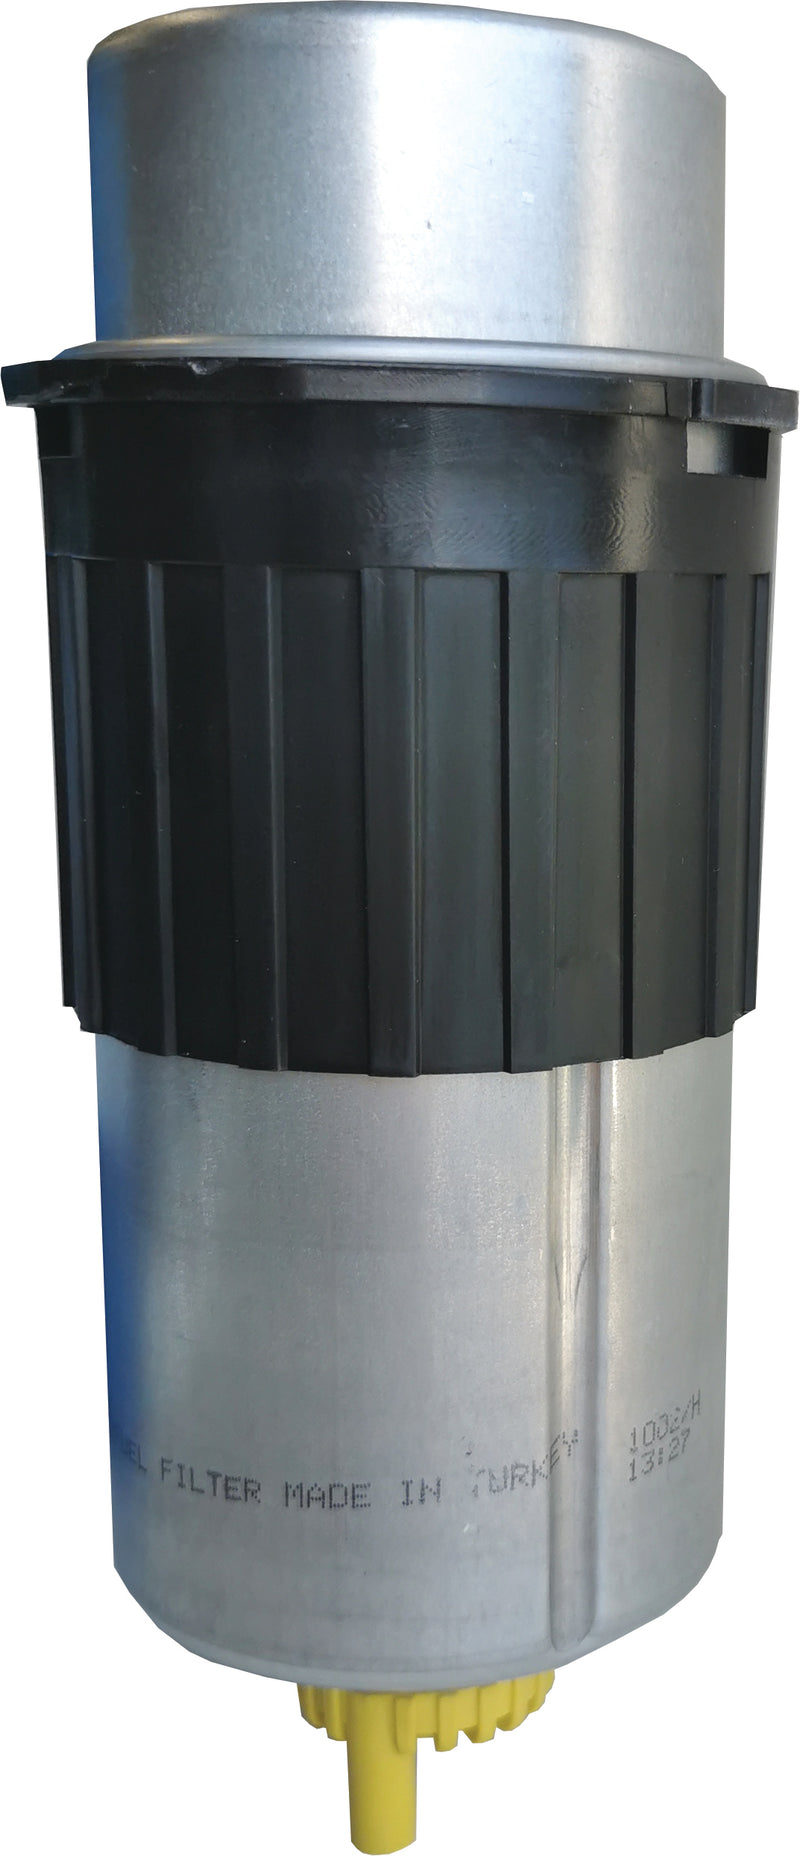 Case Engine Fuel Filter - Main Filter Stanadyne Type